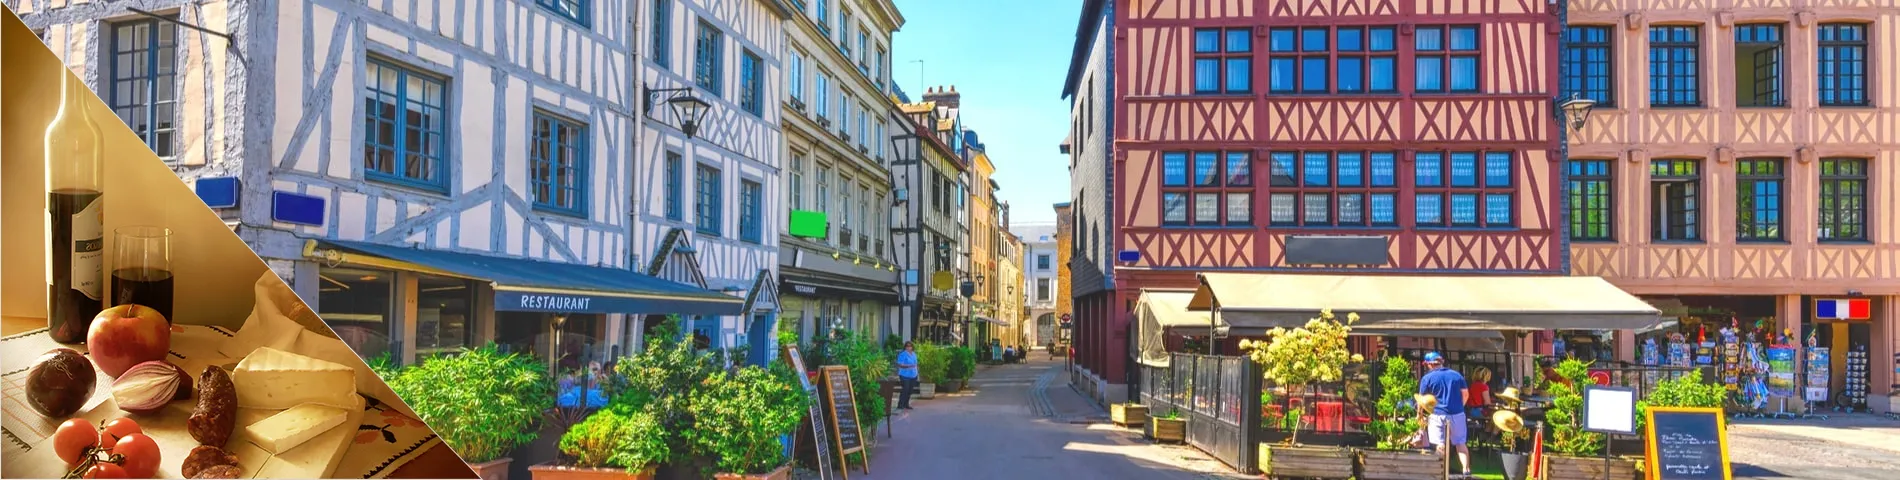 Rouen - Franska & kultur